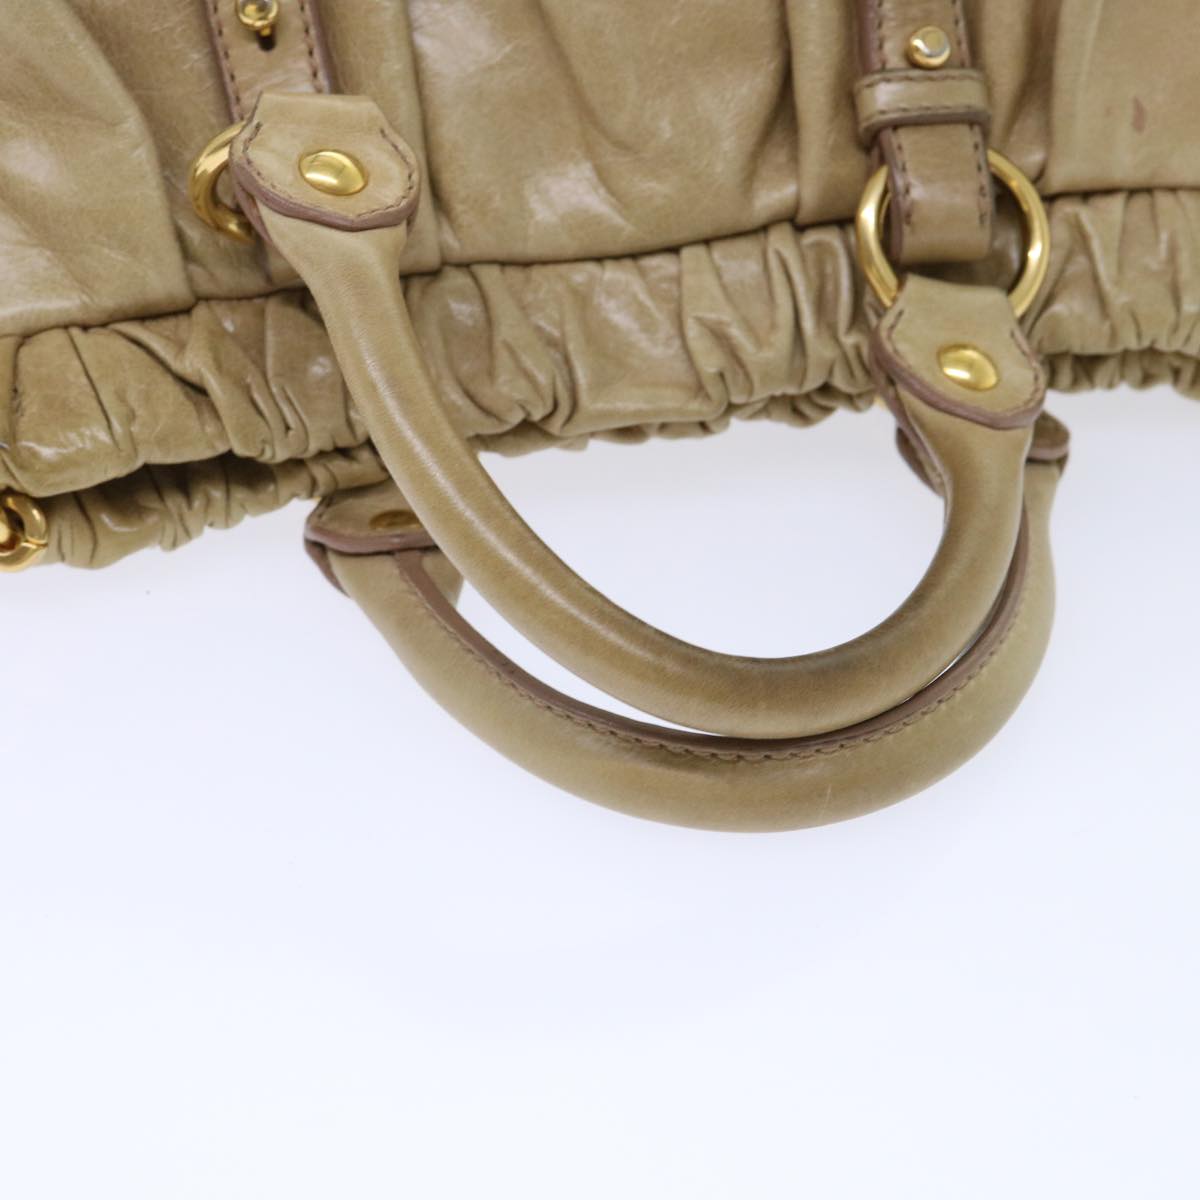 Miu Miu Hand Bag Leather 2way Shoulder Bag Beige Auth ep1389